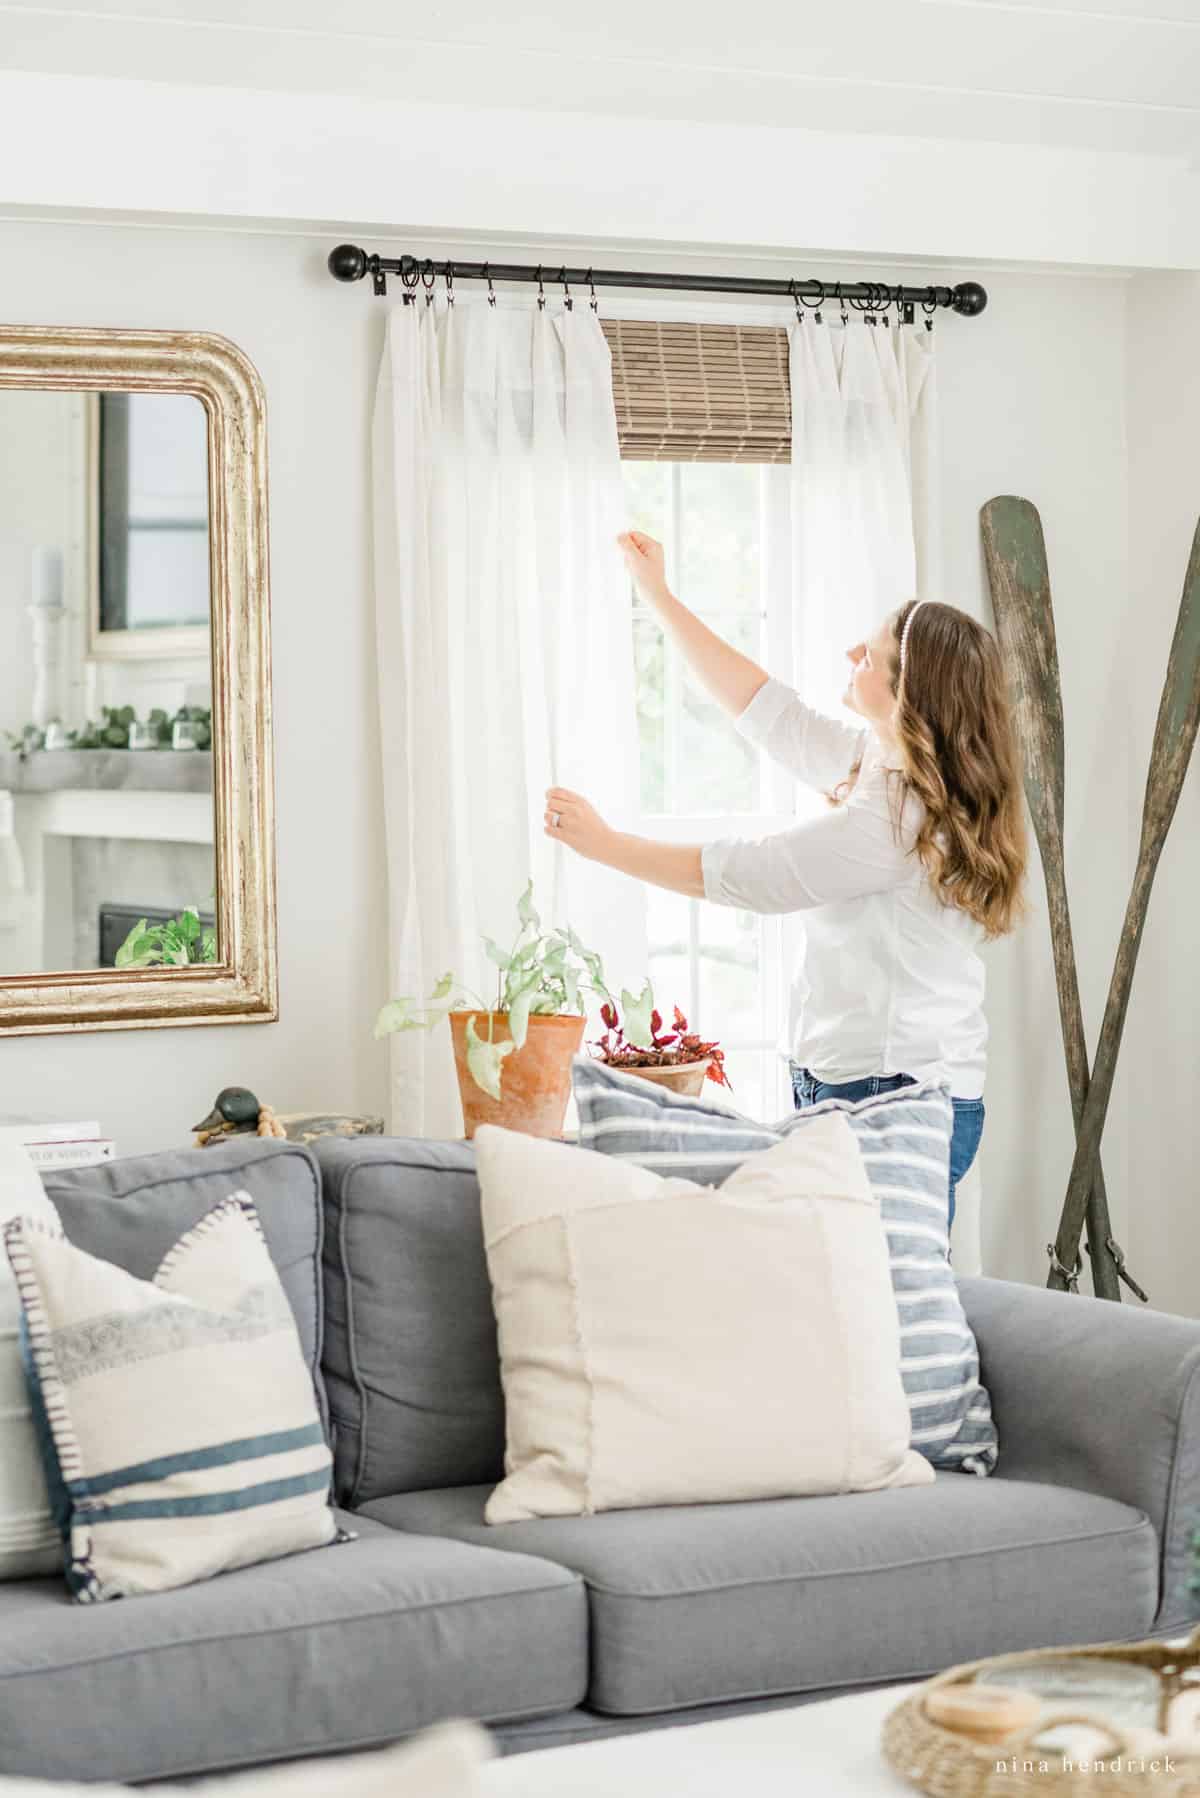 Nina Hendrick showing inexpensive window treatments in her living room